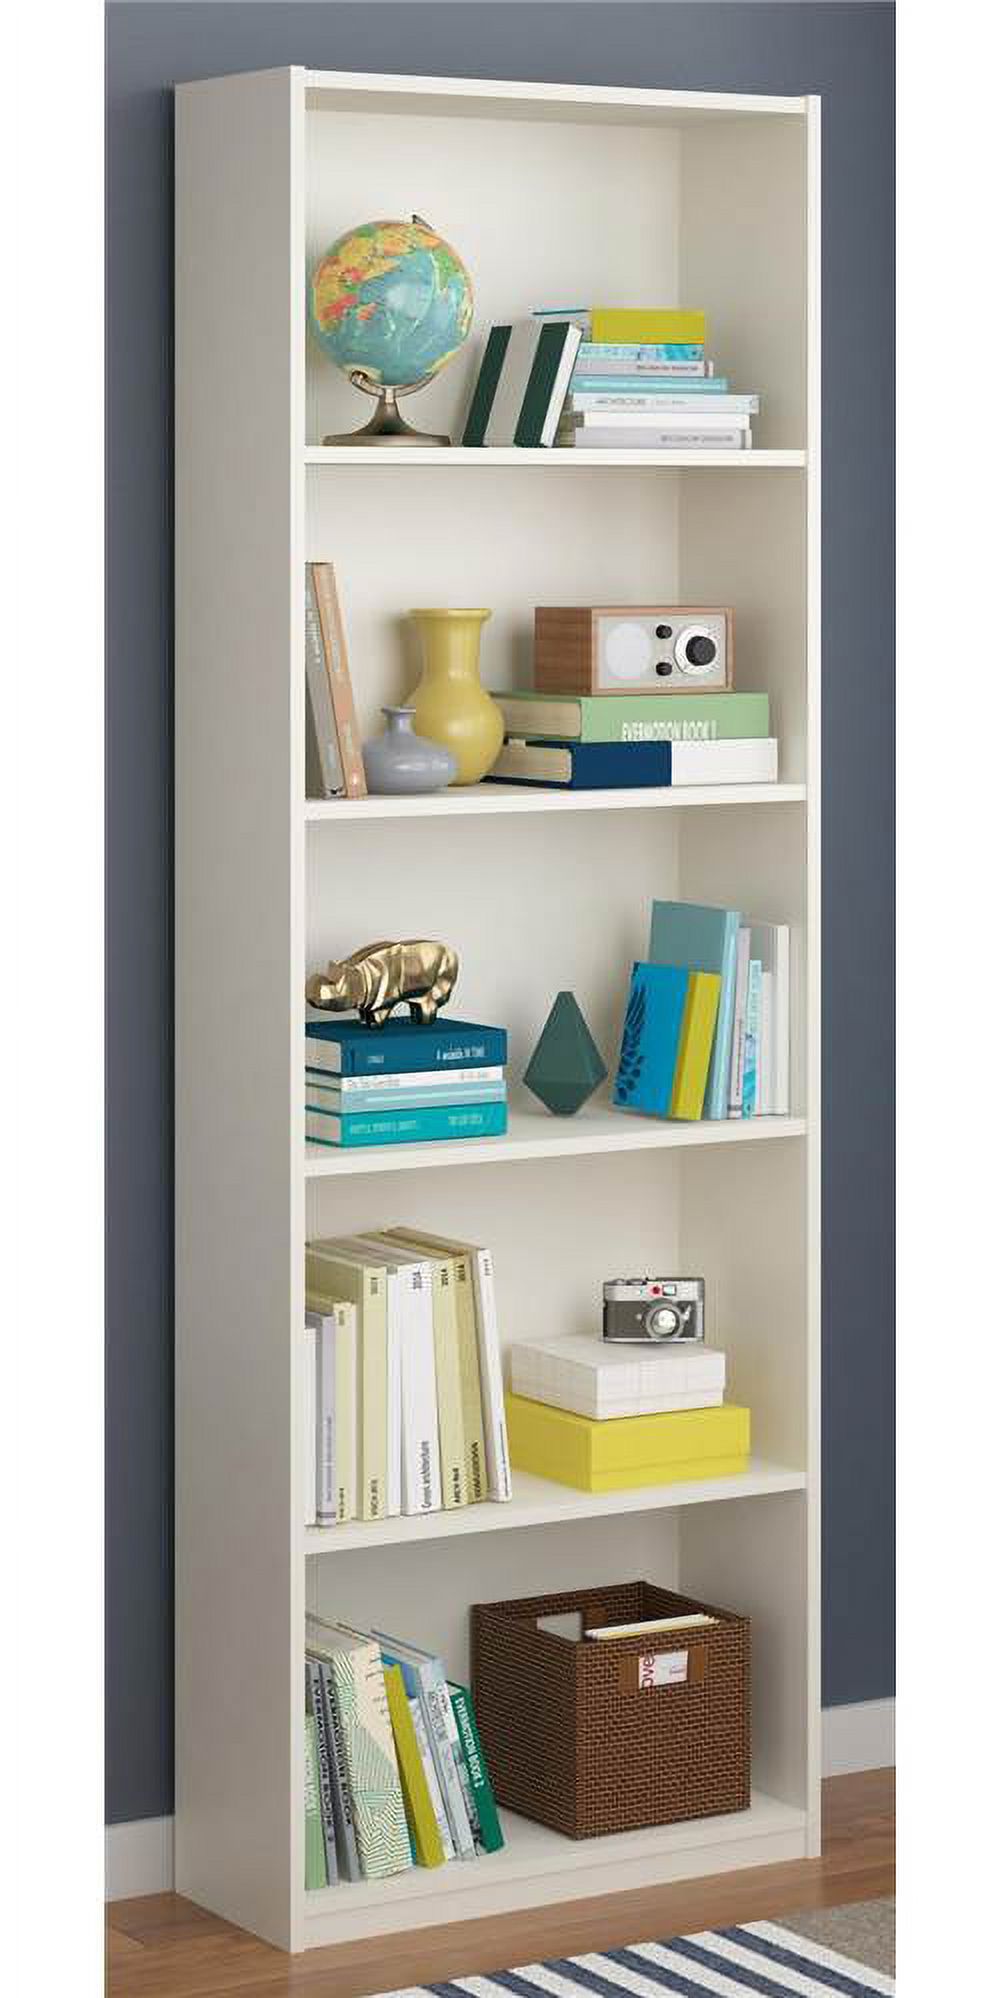 Ameriwood 5-Shelf Bookcase, Multiple Colors - image 2 of 4